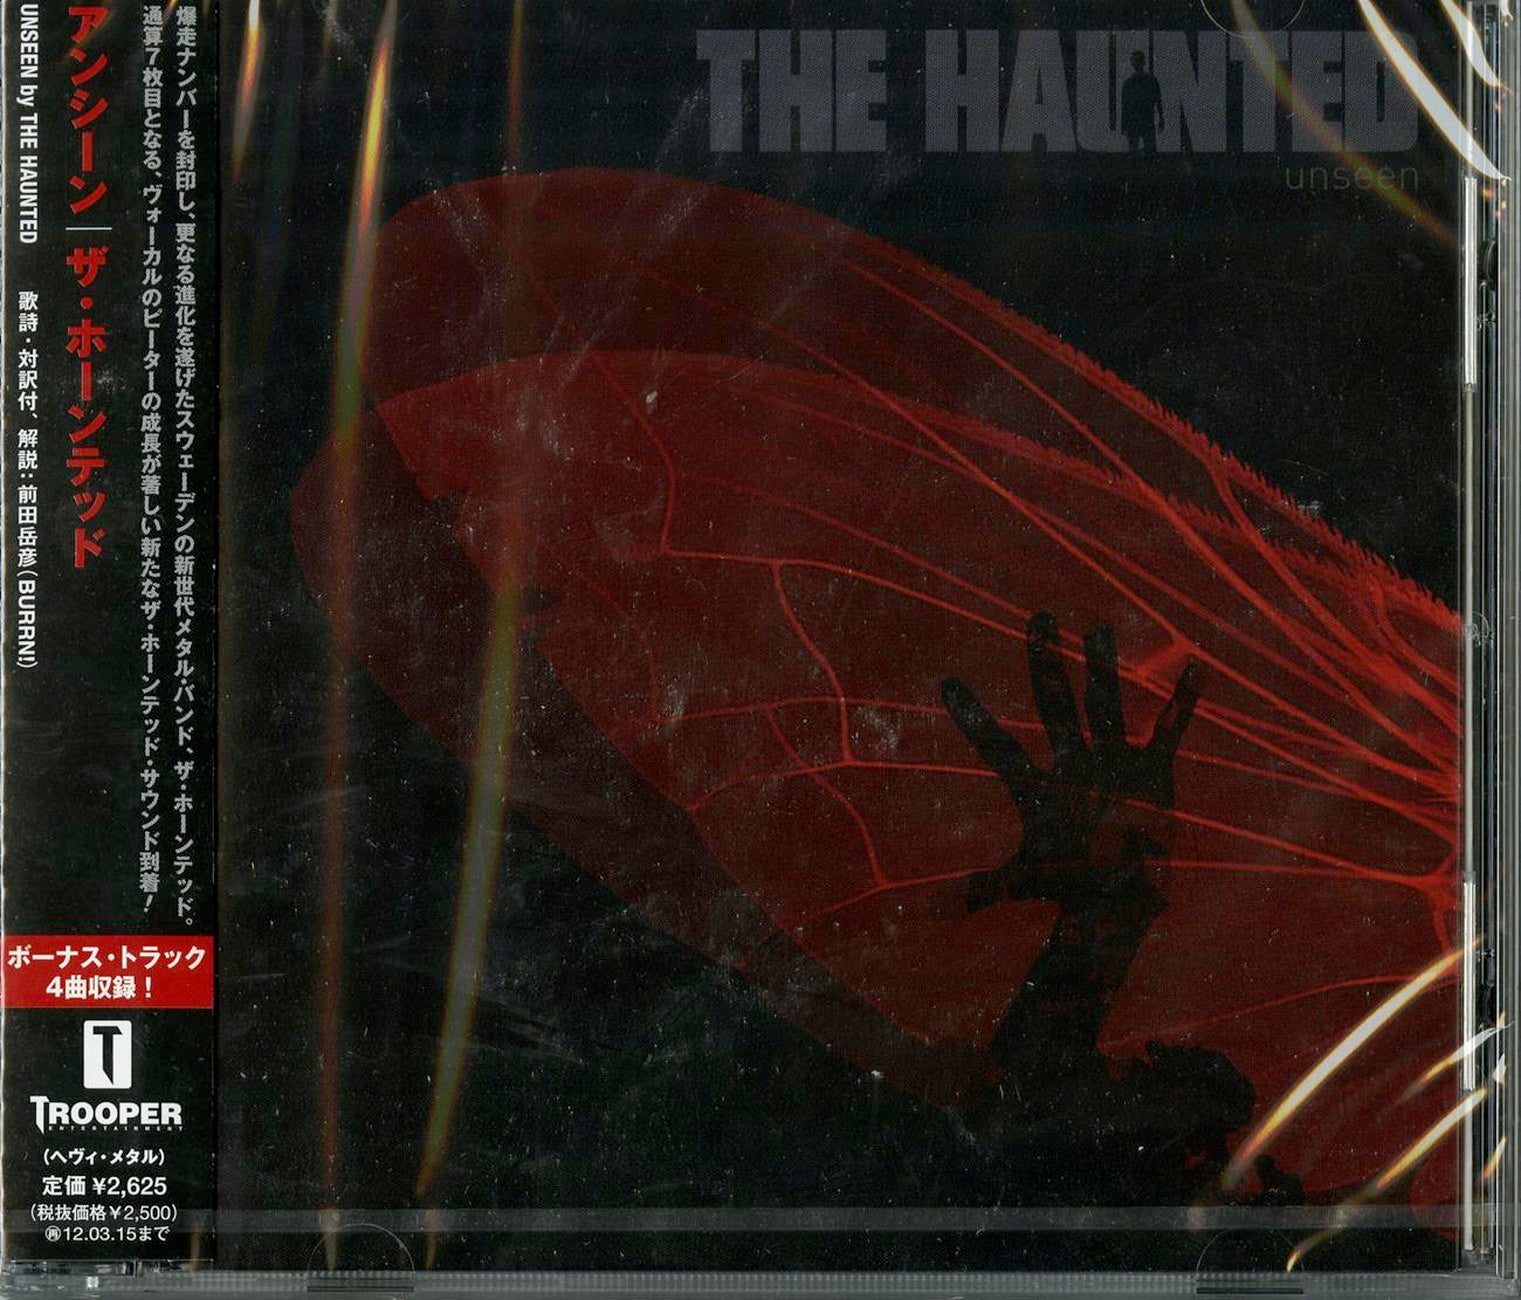 The Haunted - Unseen - Japan CD Bonus Track – CDs Vinyl Japan